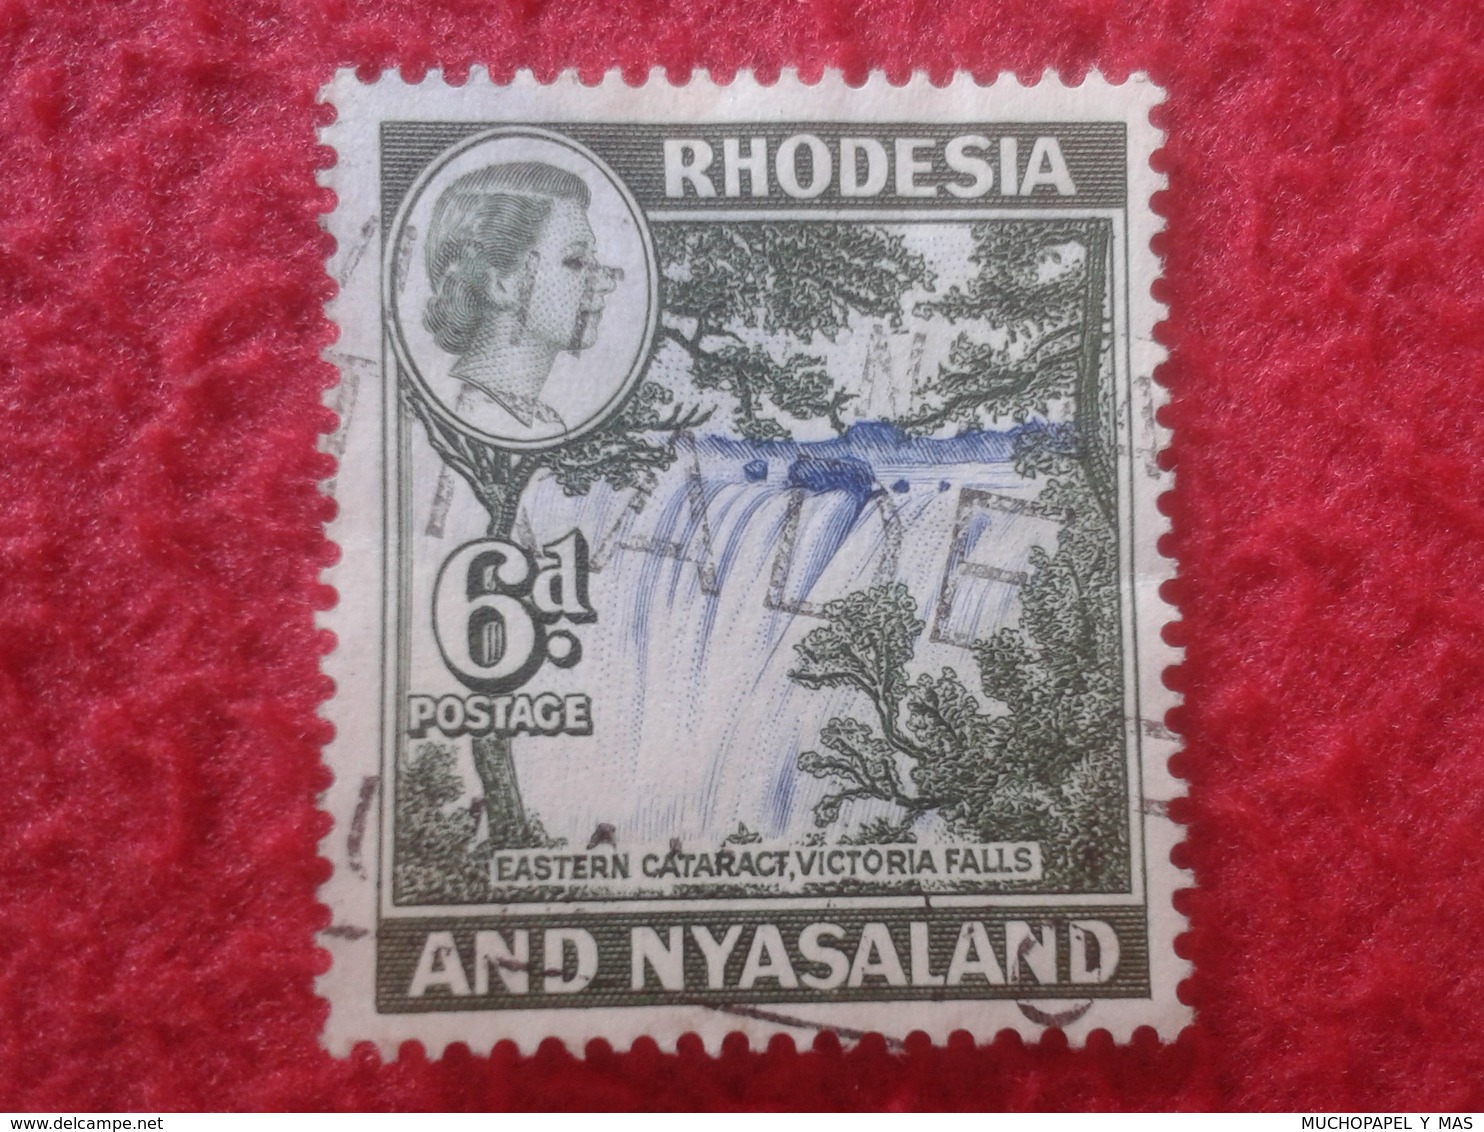 SELLO USADO USED STAMP RHODESIA & NYASALAND 6d POSTAGE ESTAERN CATARACT, VICTORIA FALLS VER FOTO/S Y DESCRIPCIÓN. - Rodesia & Nyasaland (1954-1963)